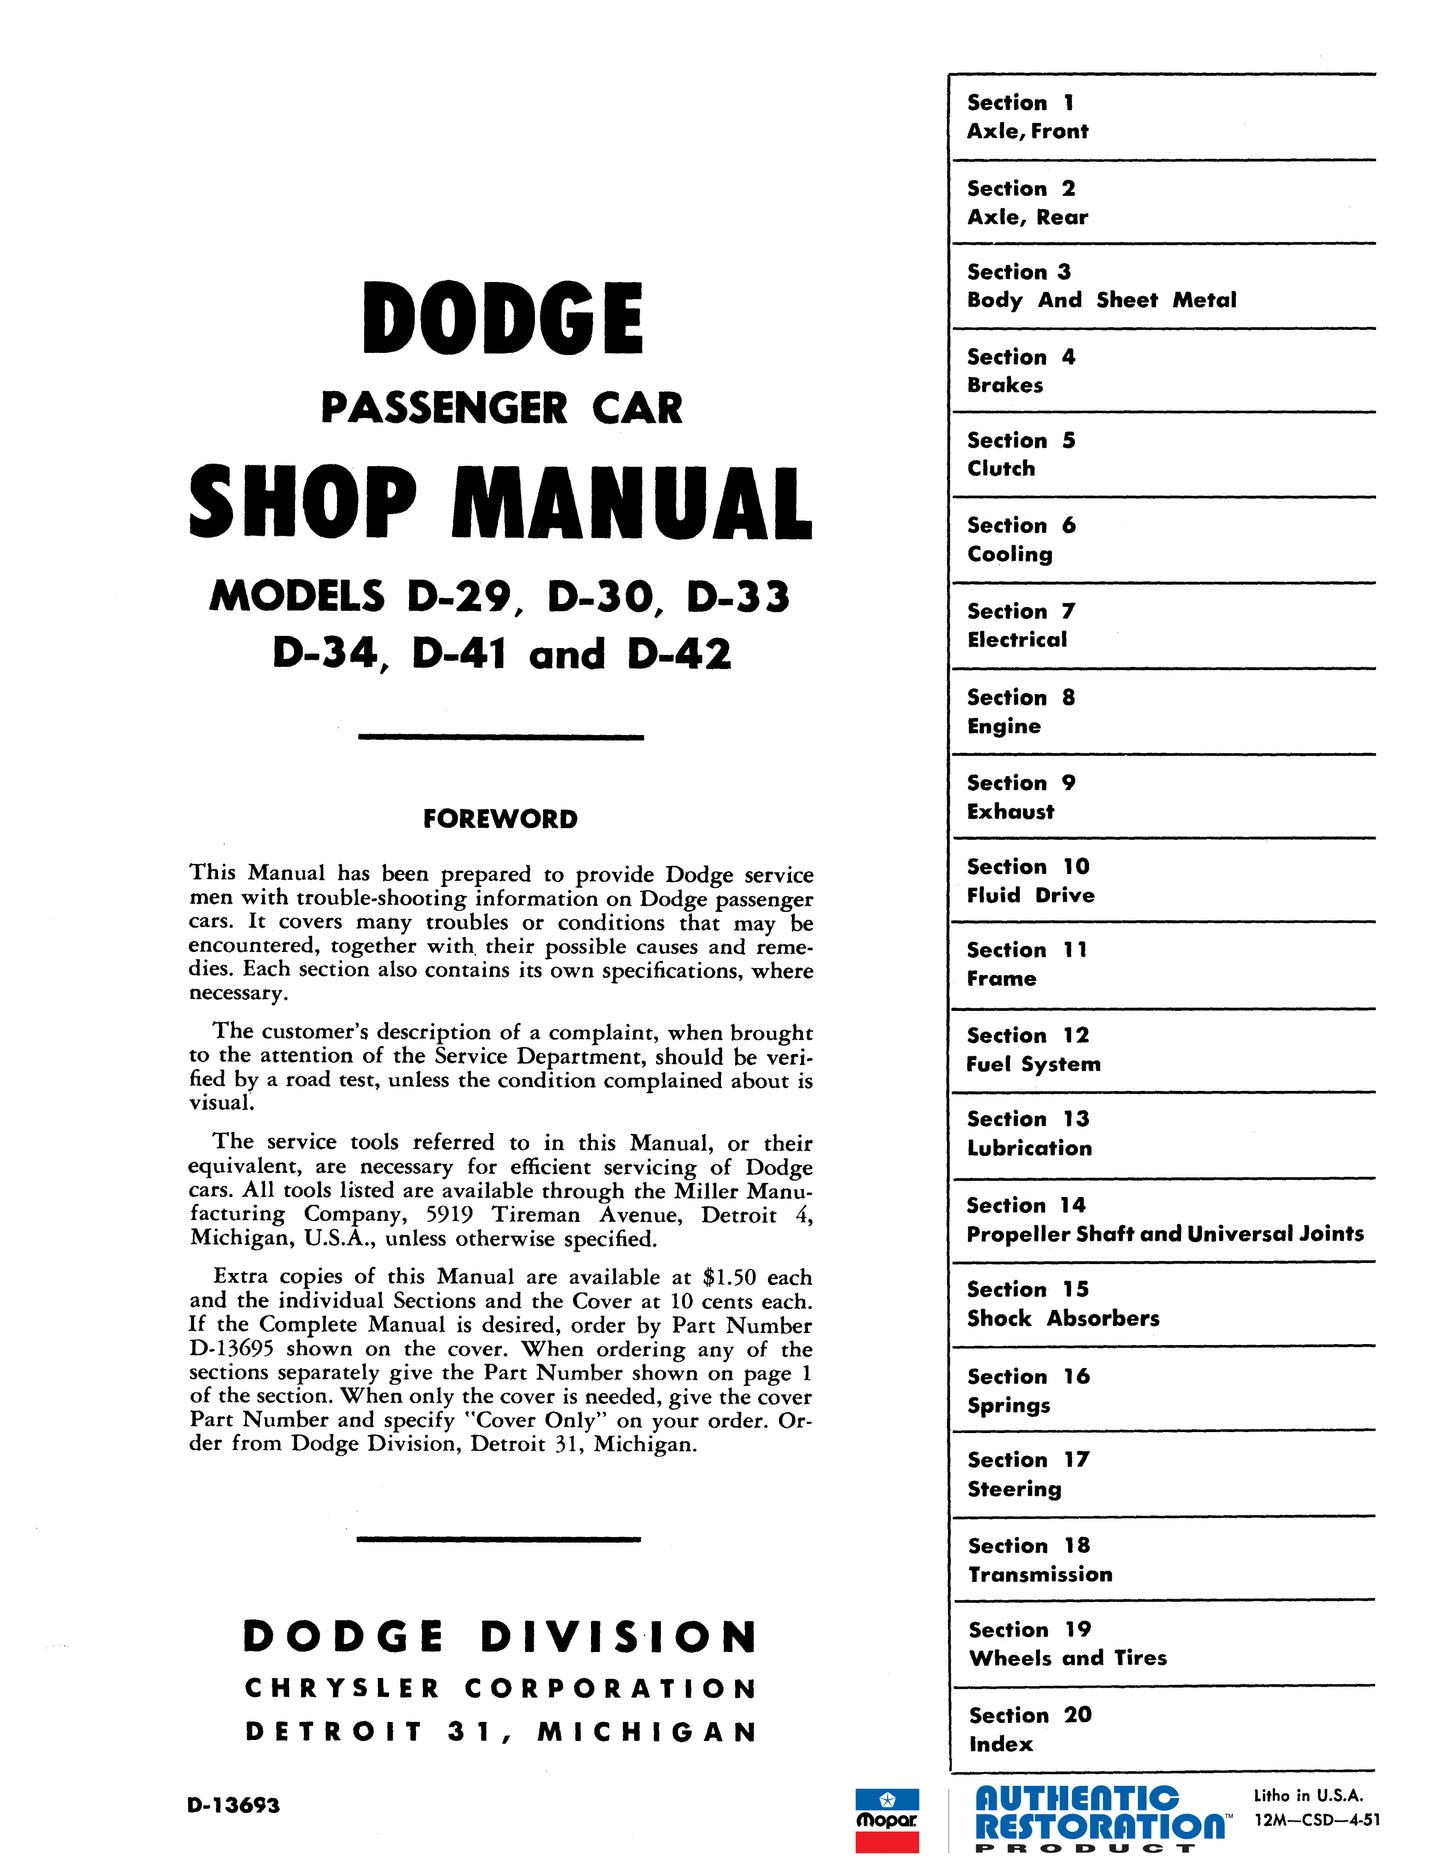 1949-1952 Dodge Service Manual - All Models